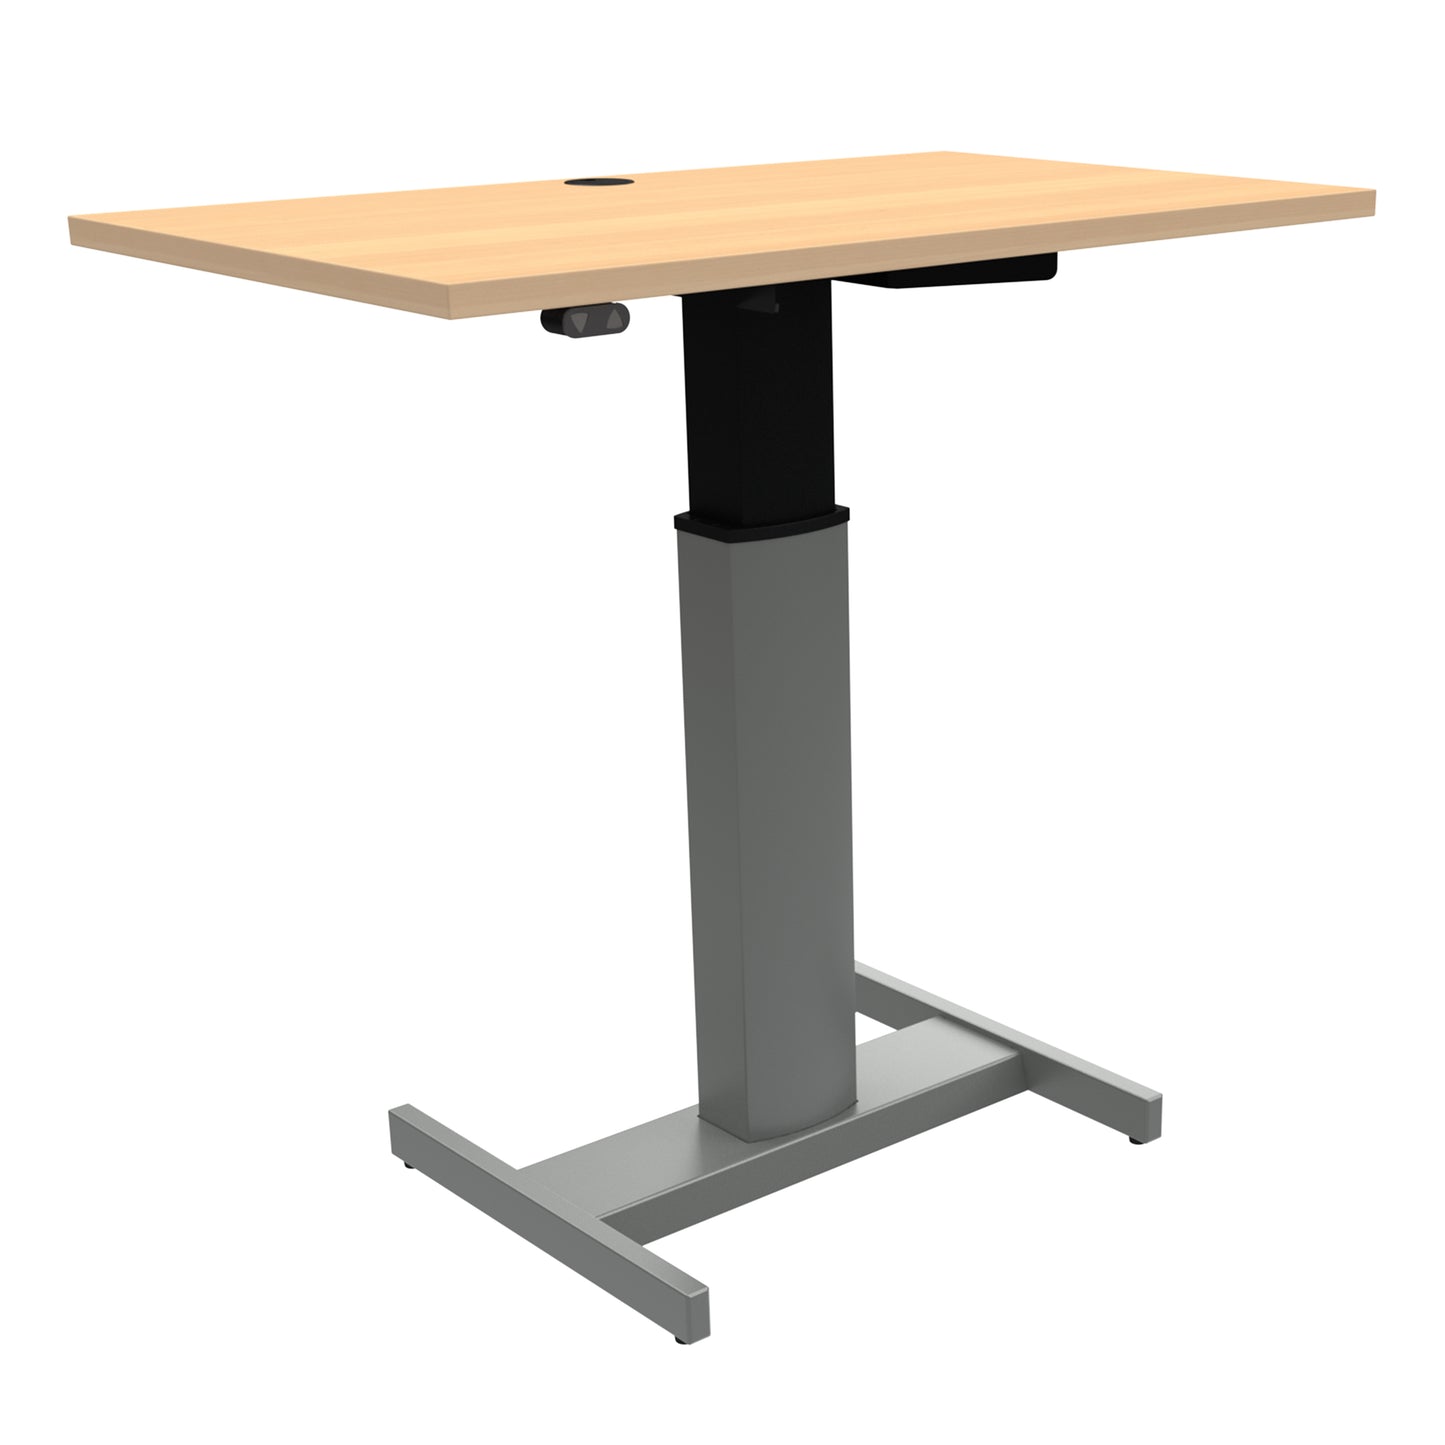 ConSet 501-19 060 Electric Height Adjustable Standing Desk, Single Leg